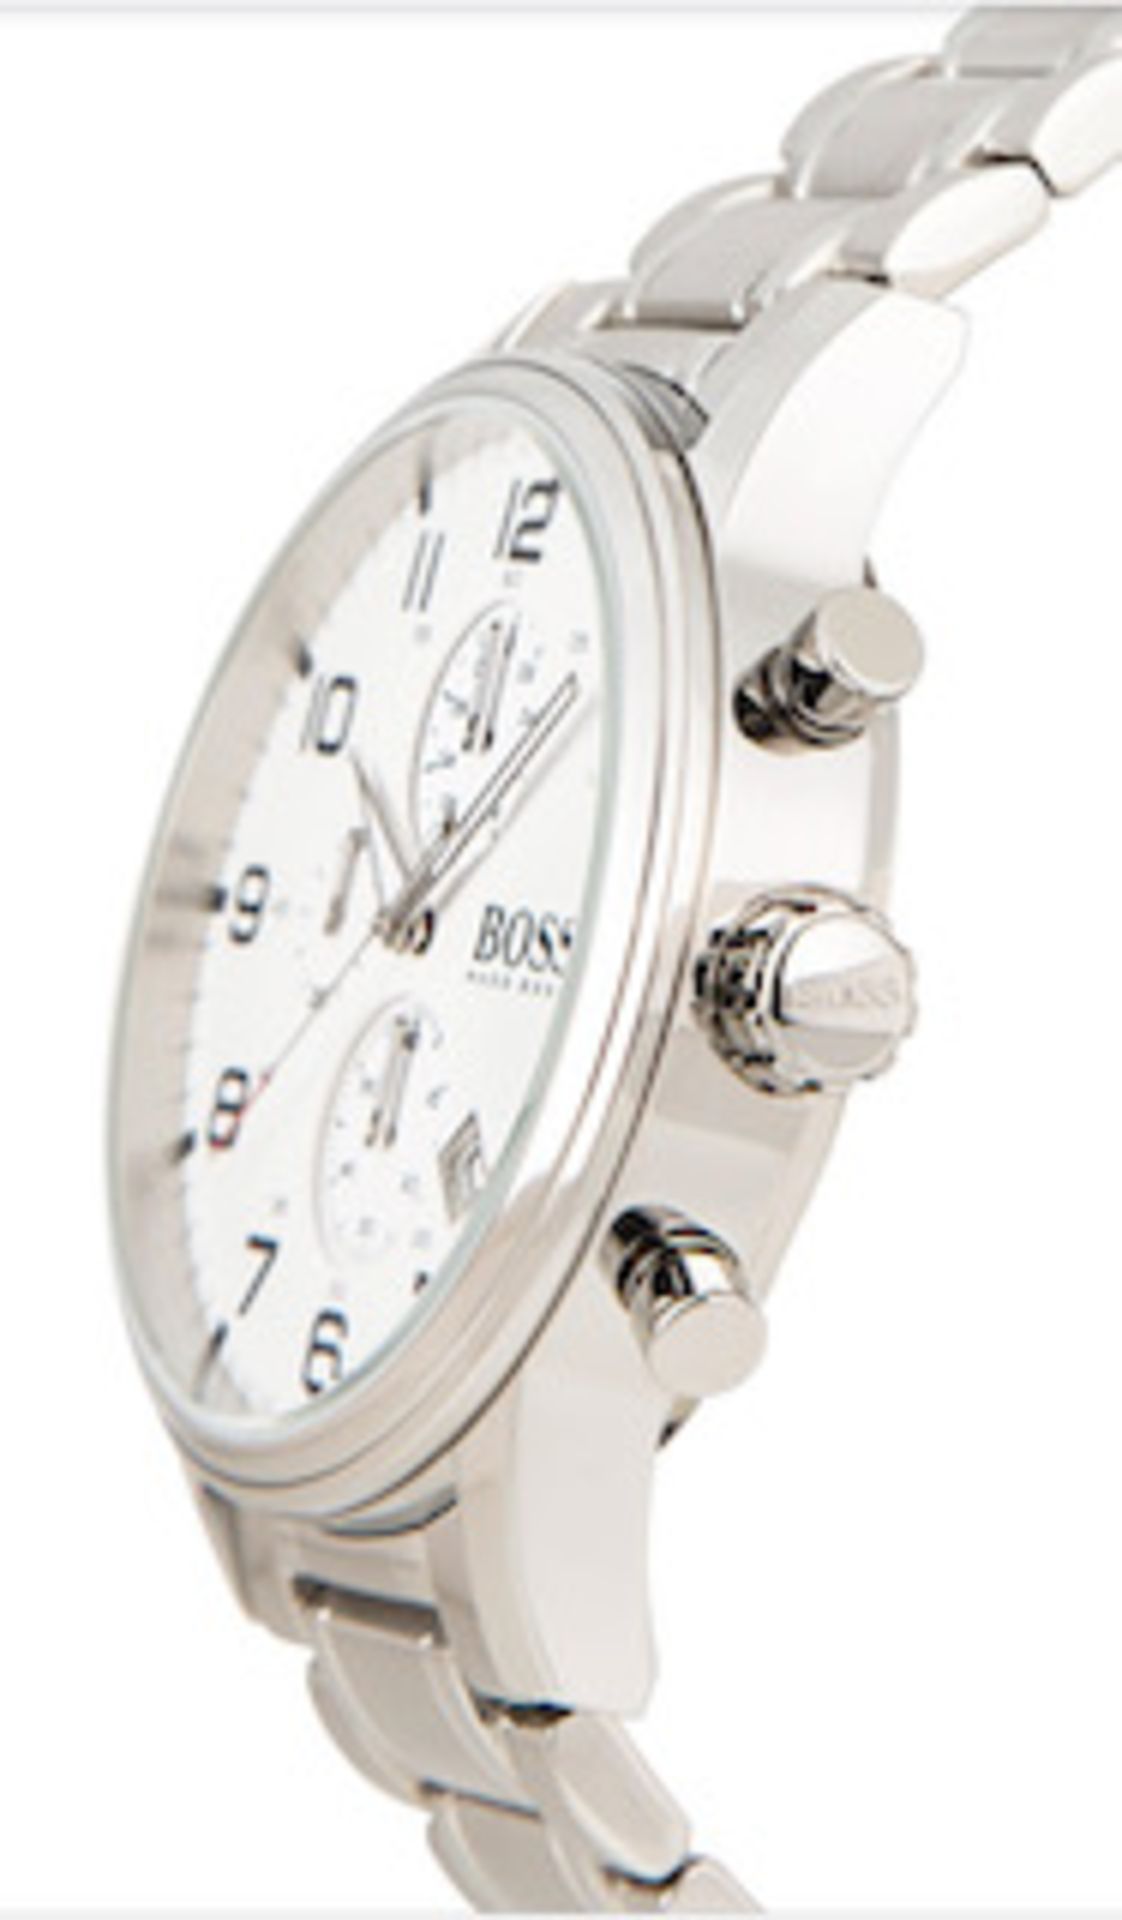 HUGO BOSS Men's Aeroliner Silver Bracelet Chronograph Watch 1513182 - Image 6 of 7